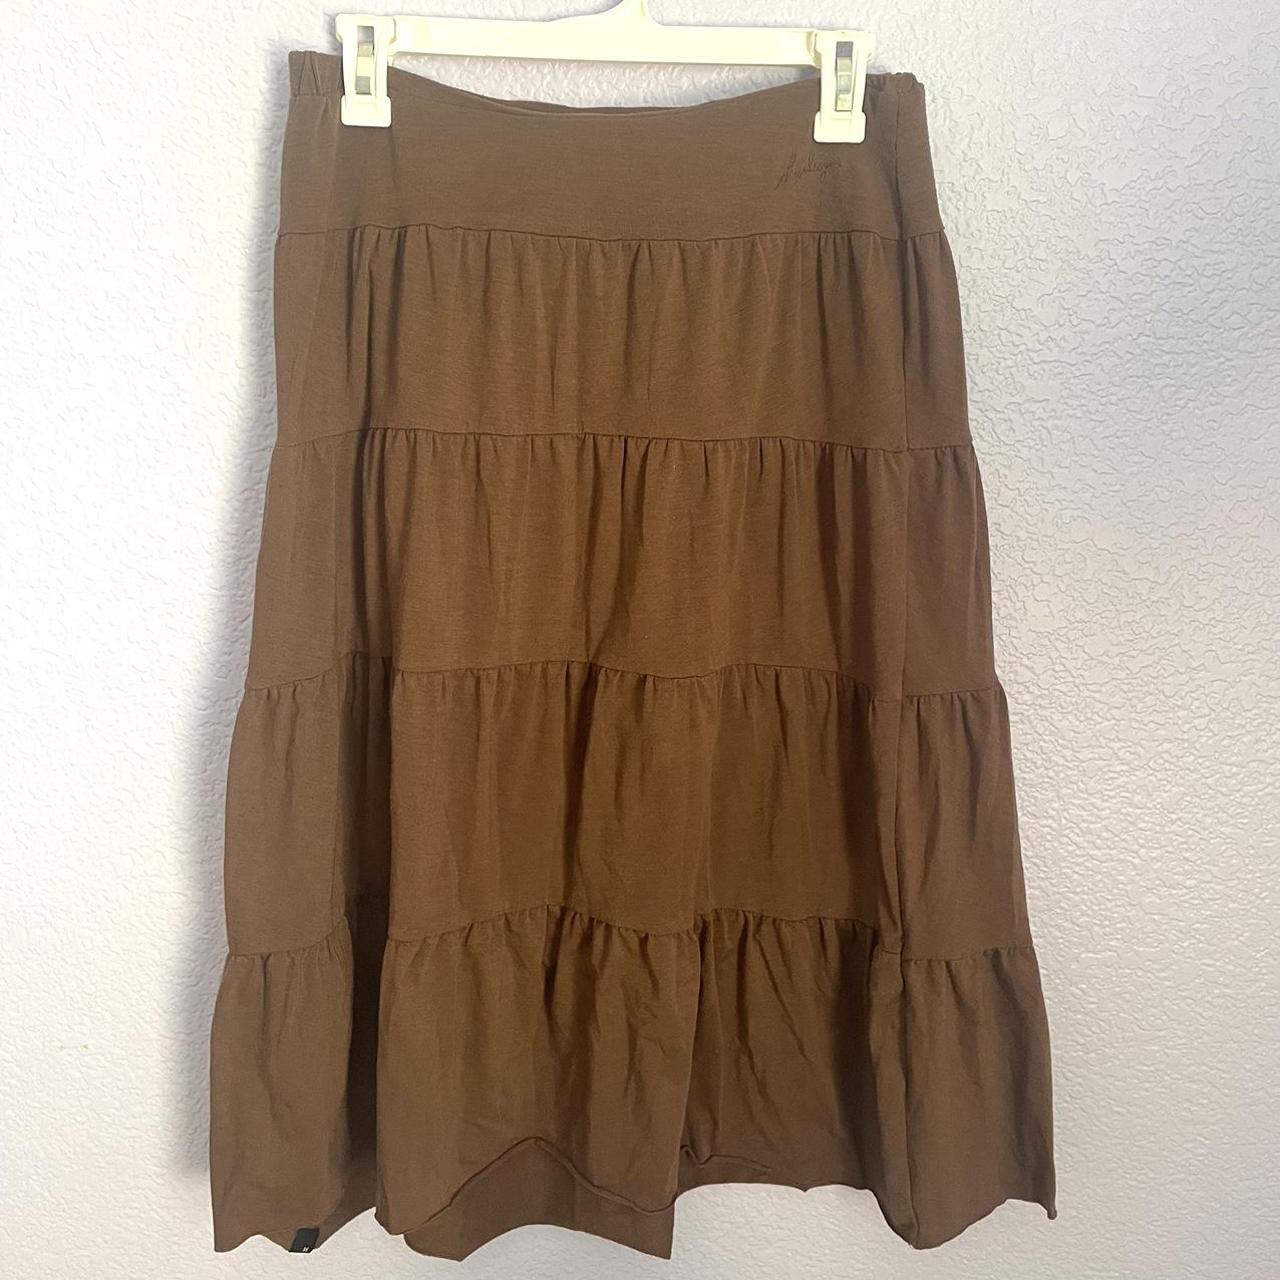 super pretty brown tiered midi skirt